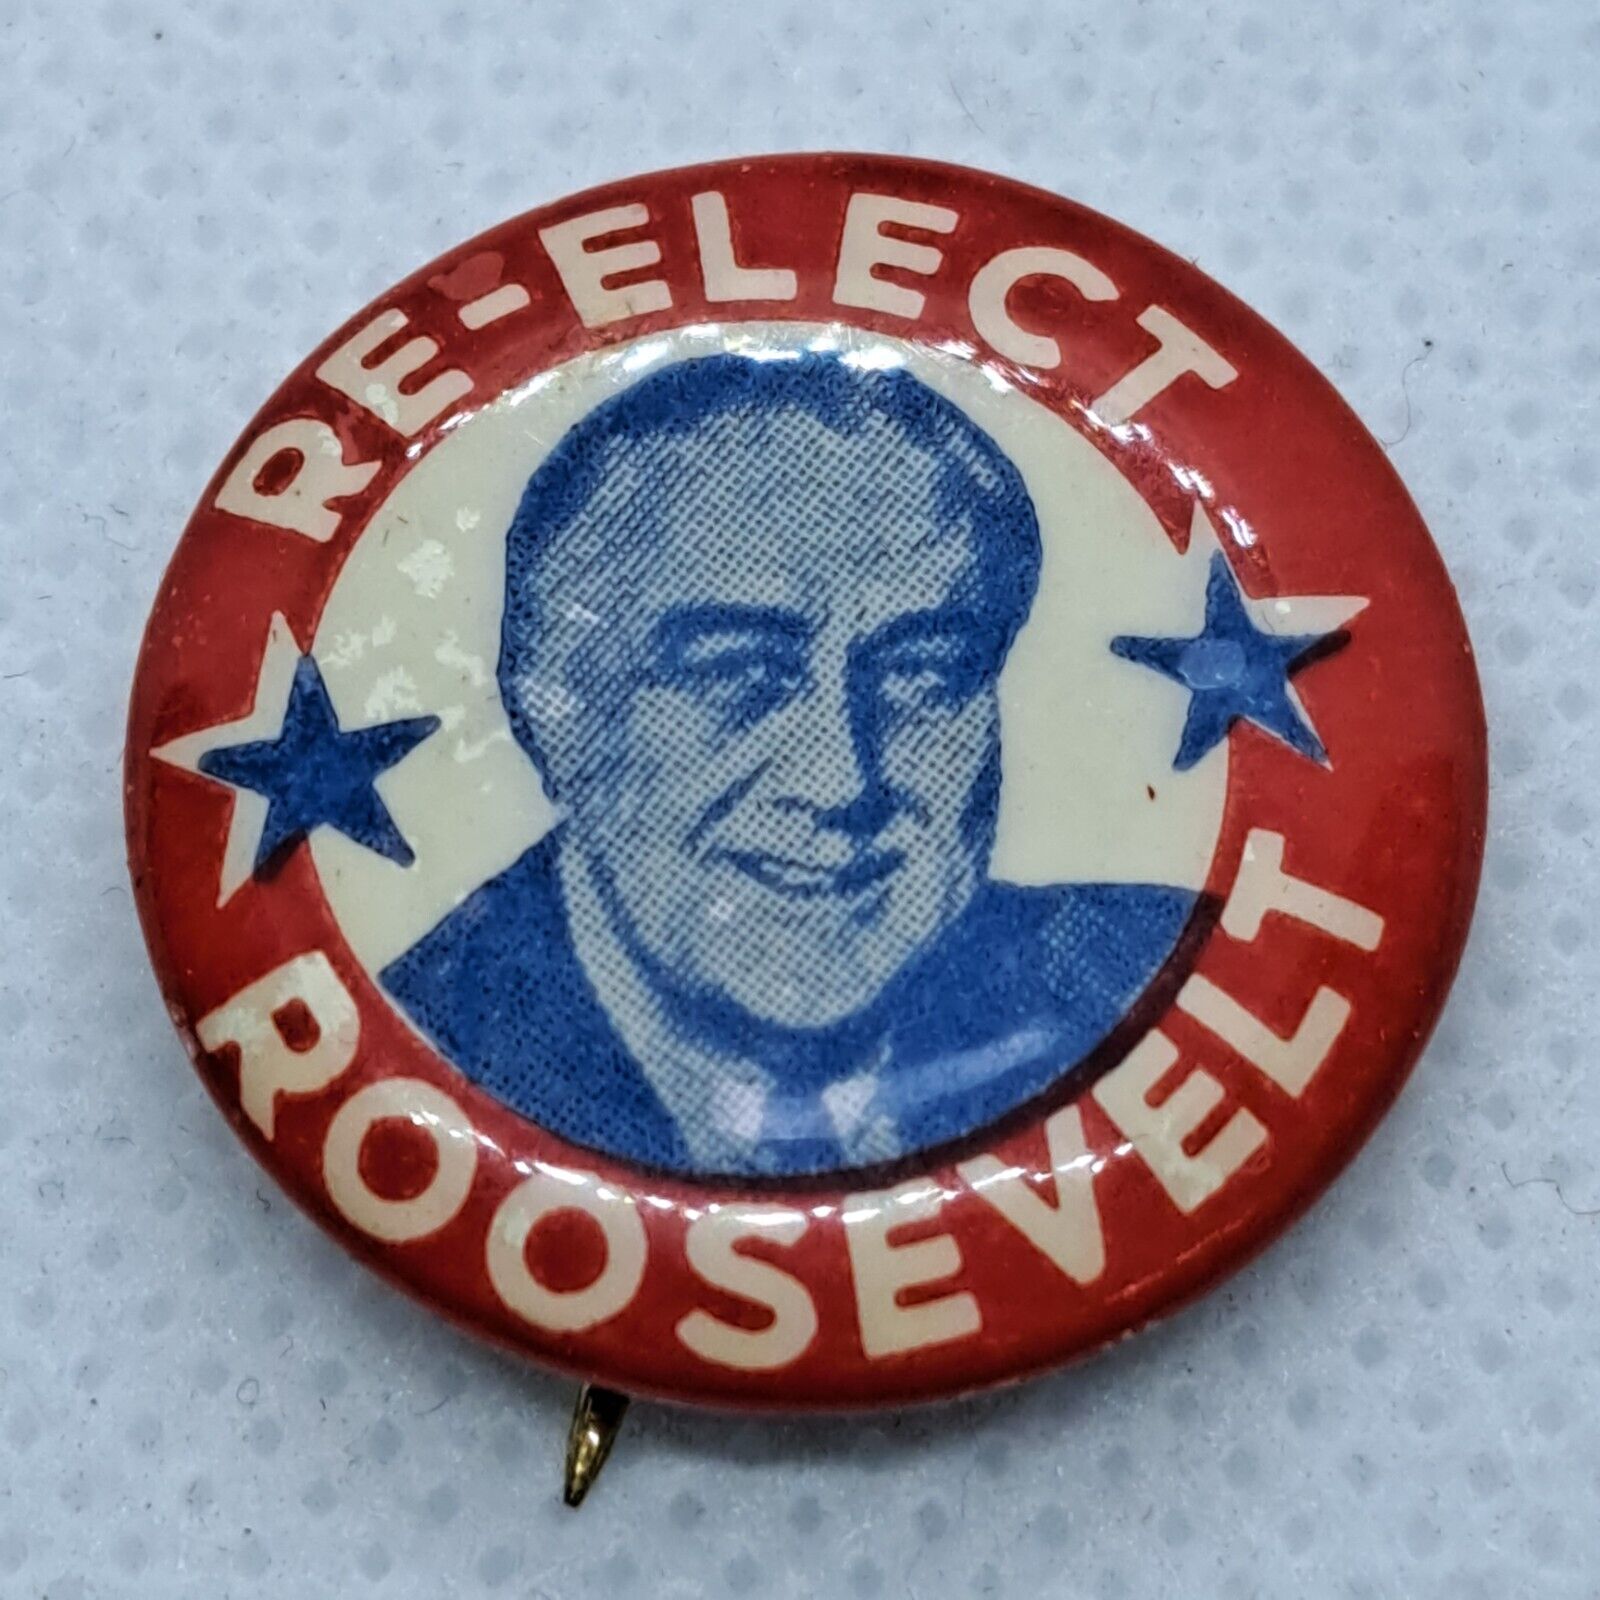 Re-Elect Roosevelt Picture Political Campaign Button Pinback Franklin Roosevelt